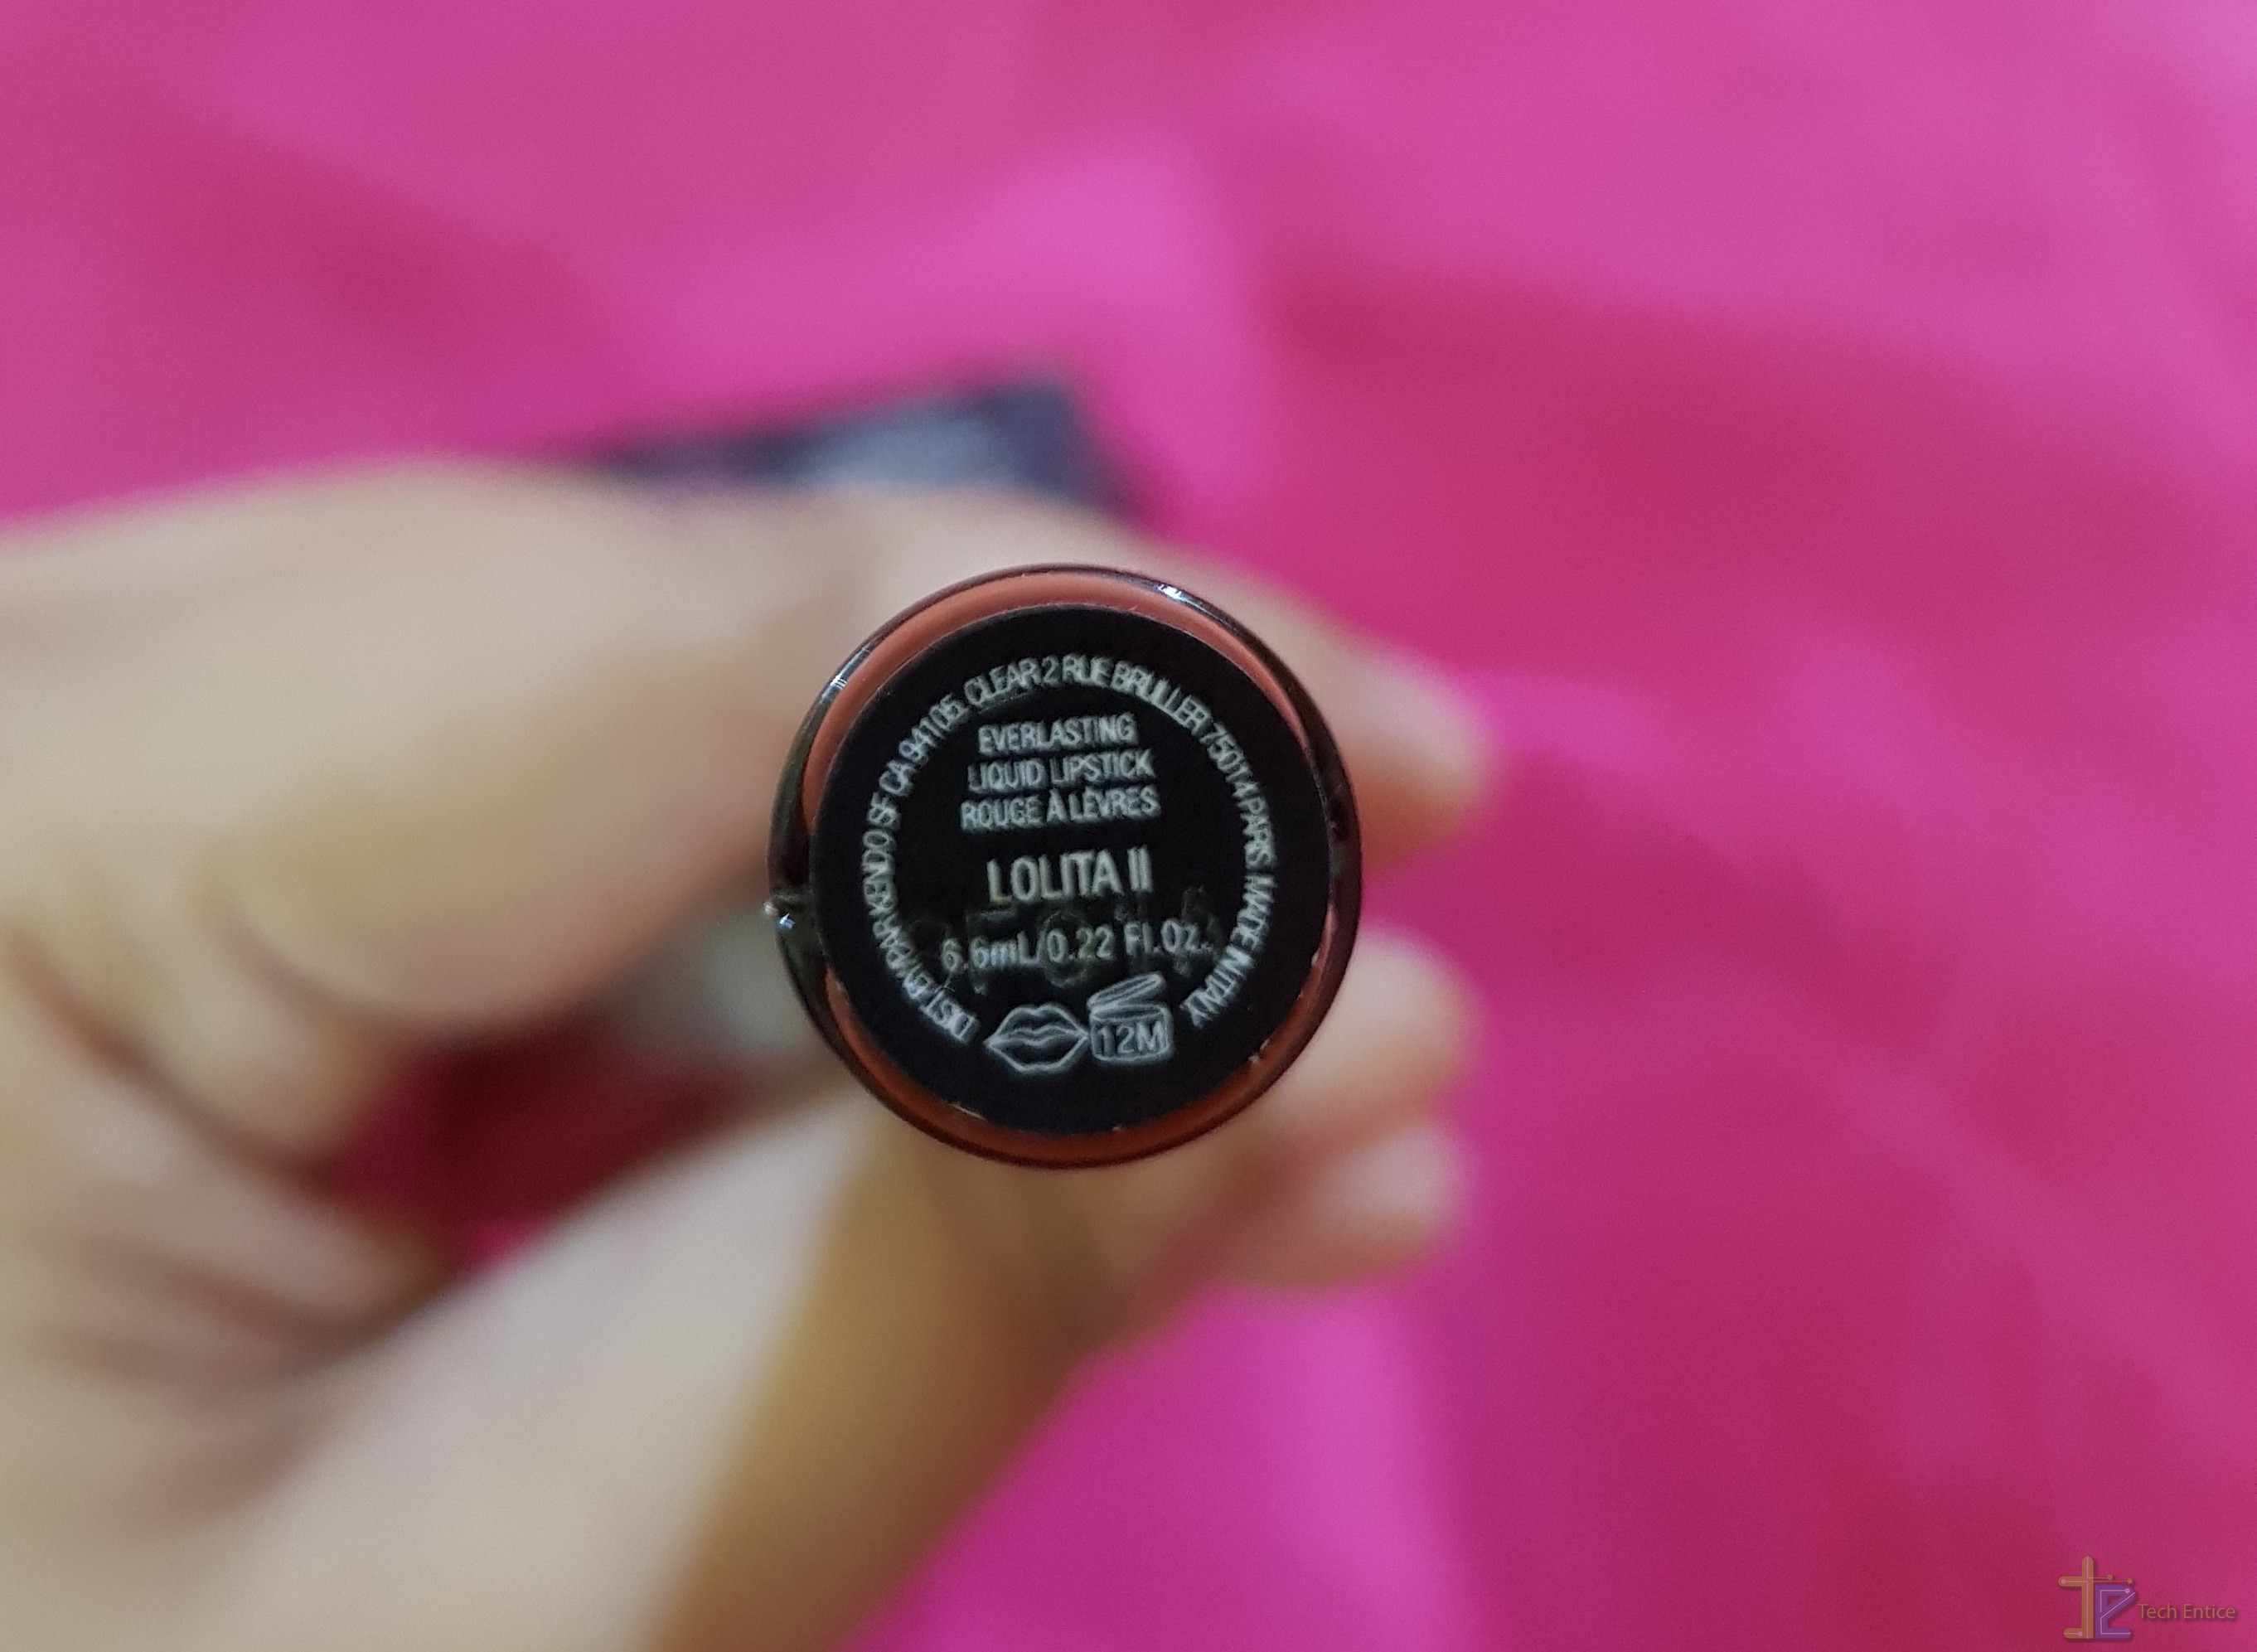 Kat Von D Everlasting Liquid Lipstick Shade Lolita II Review And Swatch